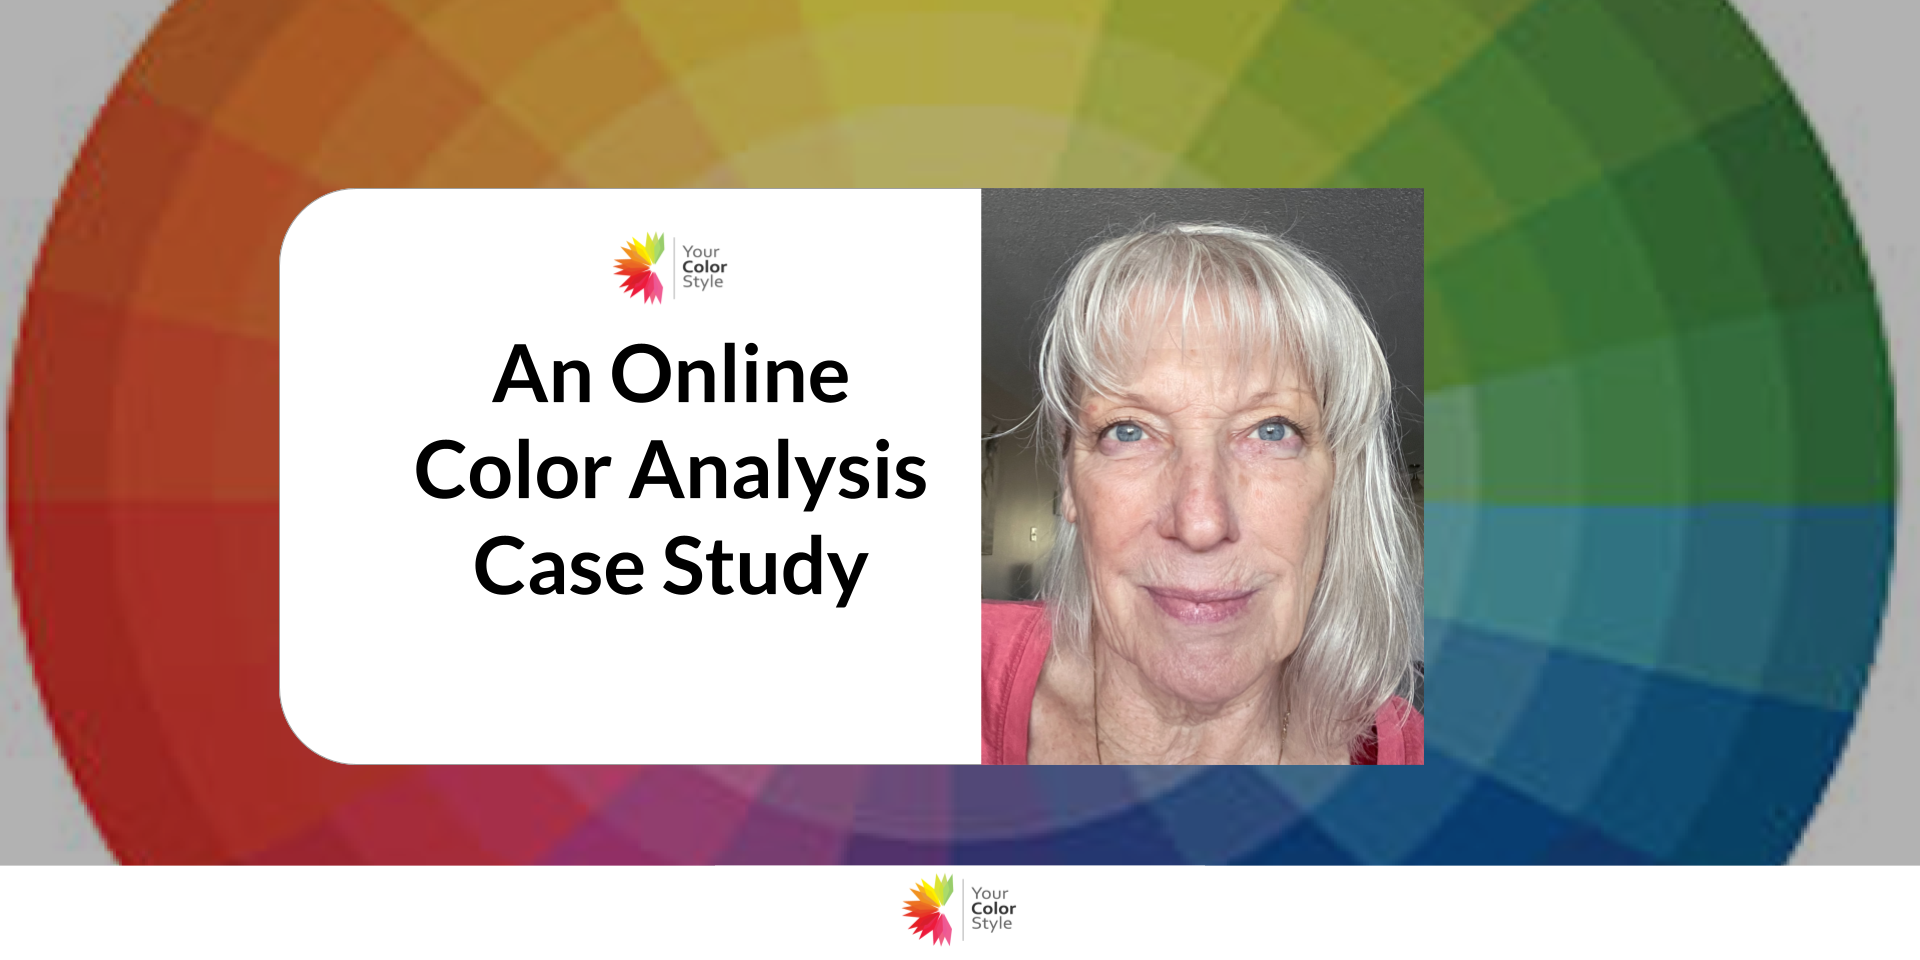 Virtual Color Analysis - Pale Blonde Hair, Blue Eyes